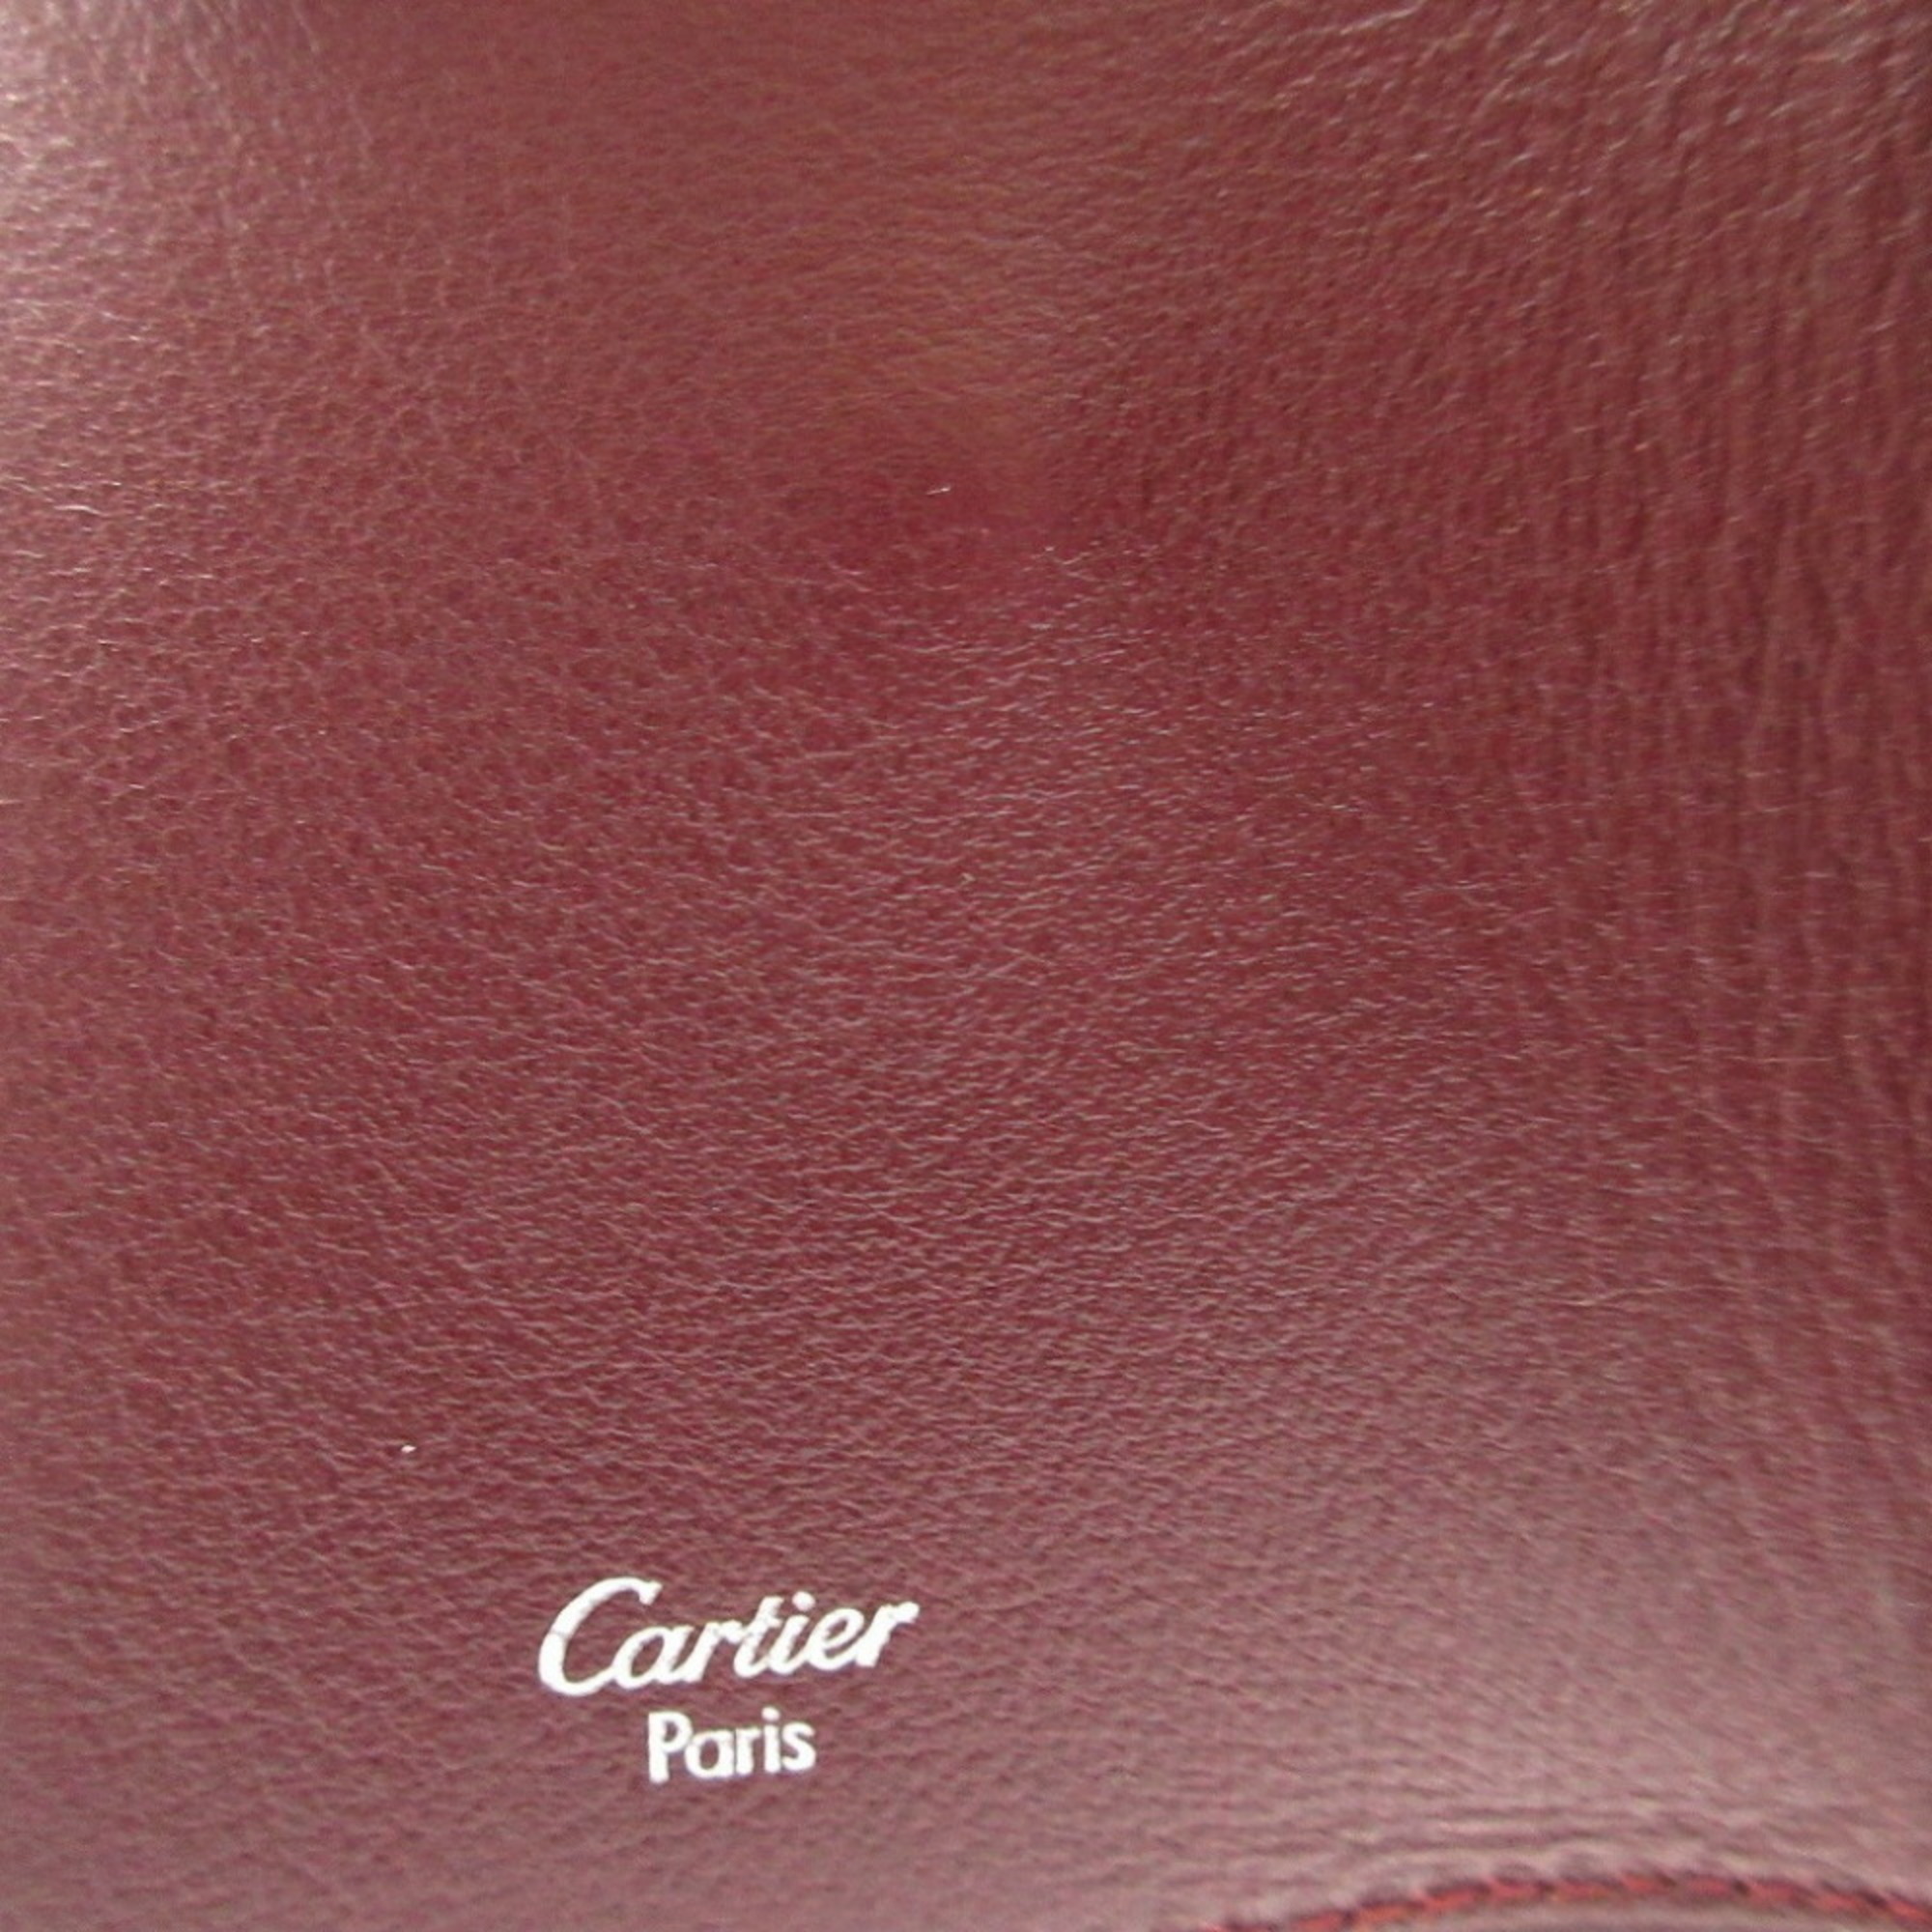 Cartier Santos Leather Black 6 Row Key Case 0007Cartier 6B0007ISI5